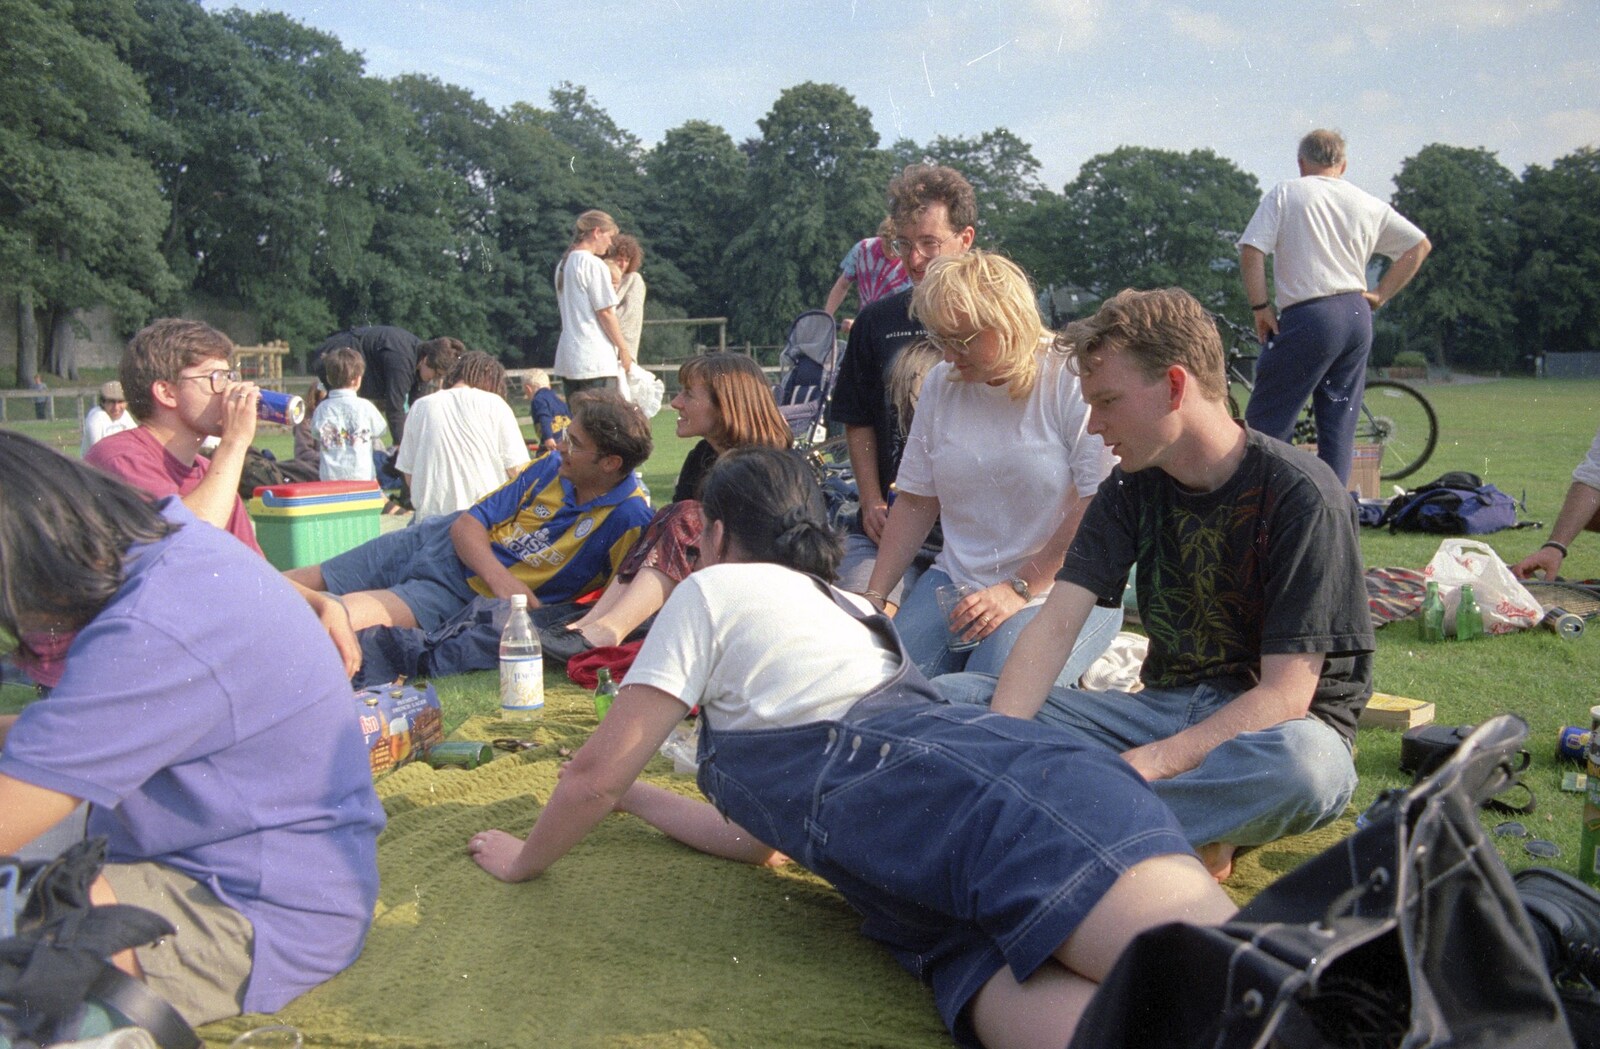 CISU Hang Around Keswick and The Briars, Cumbria - 16th September 1996: Hanging around on a playing field